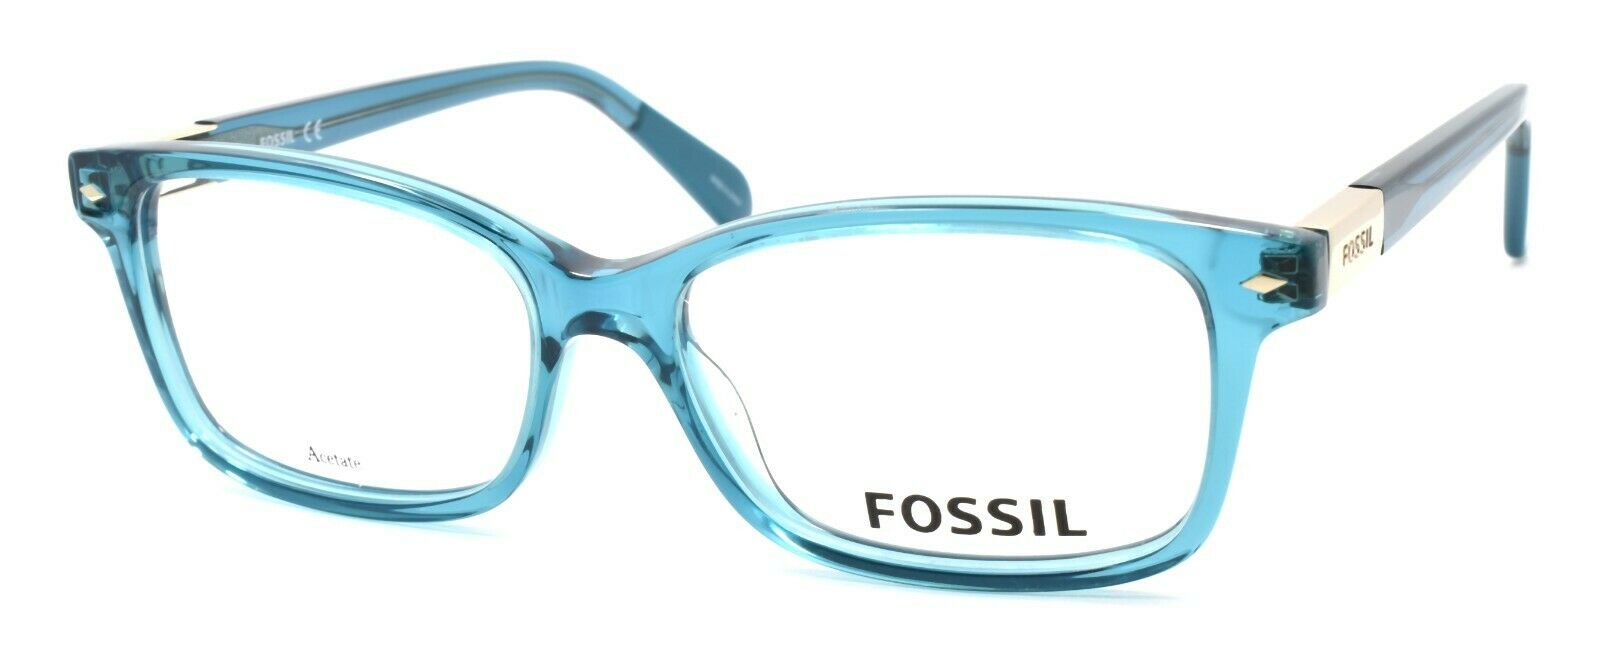 1-Fossil FOS 6047 48F Women's Eyeglasses Frames 52-15-140 Transparent Petroleum-716737680636-IKSpecs